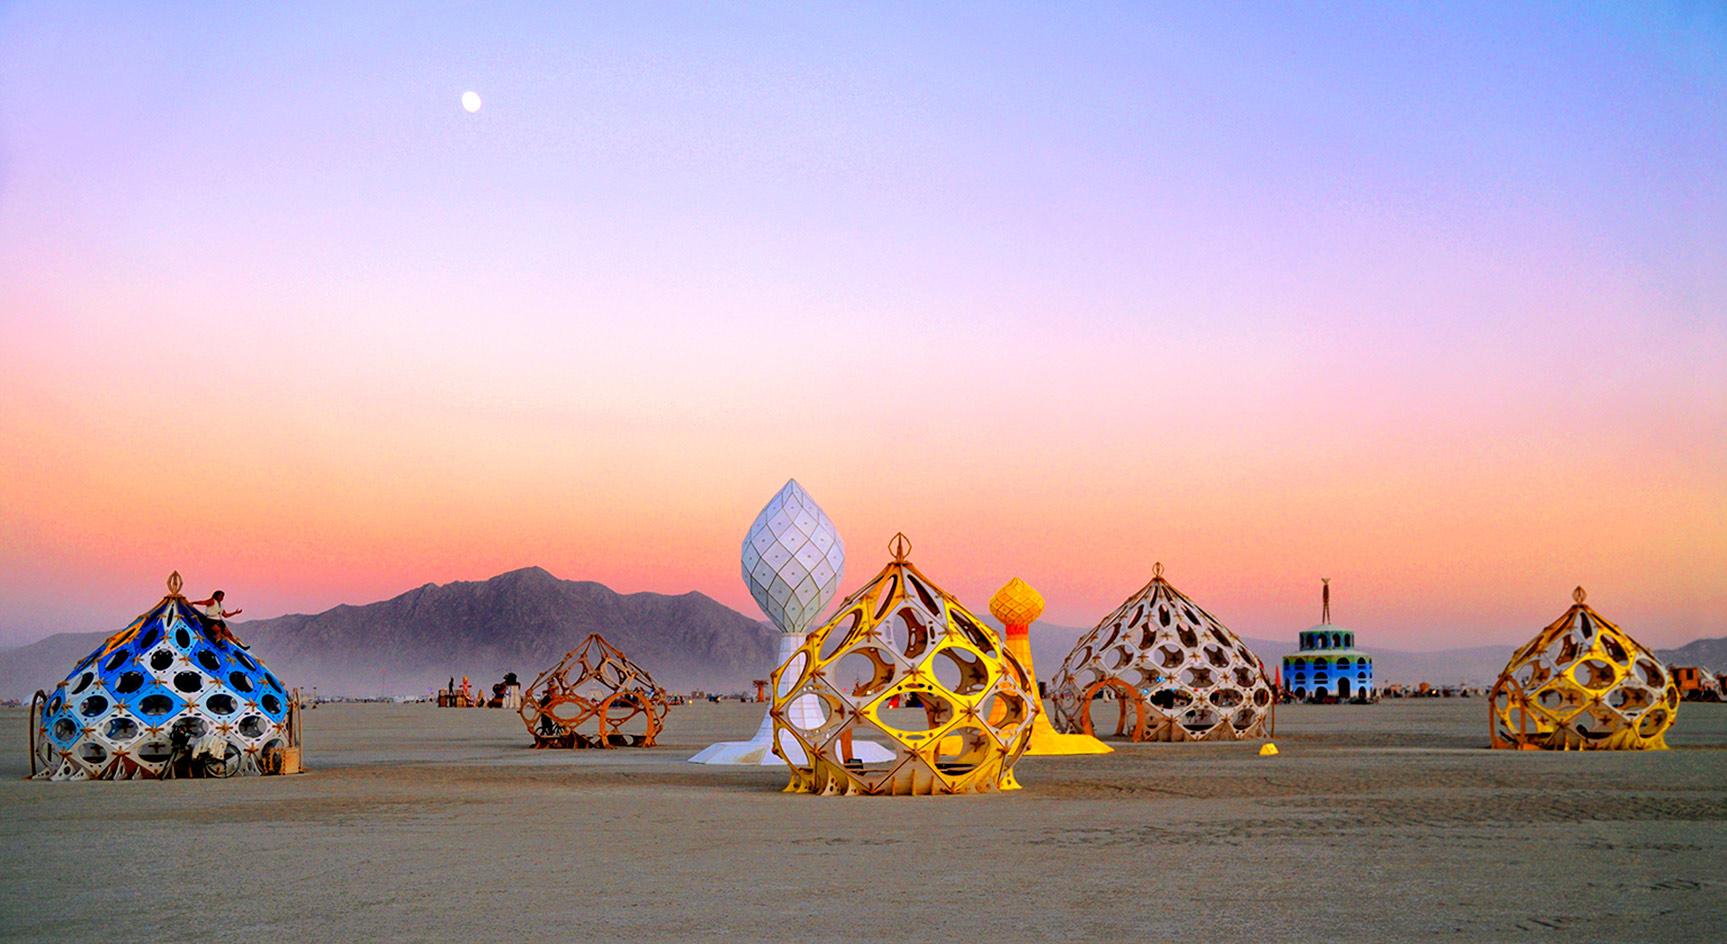 Photographer Philippe Glade documents Burning Man. Wallpaper*